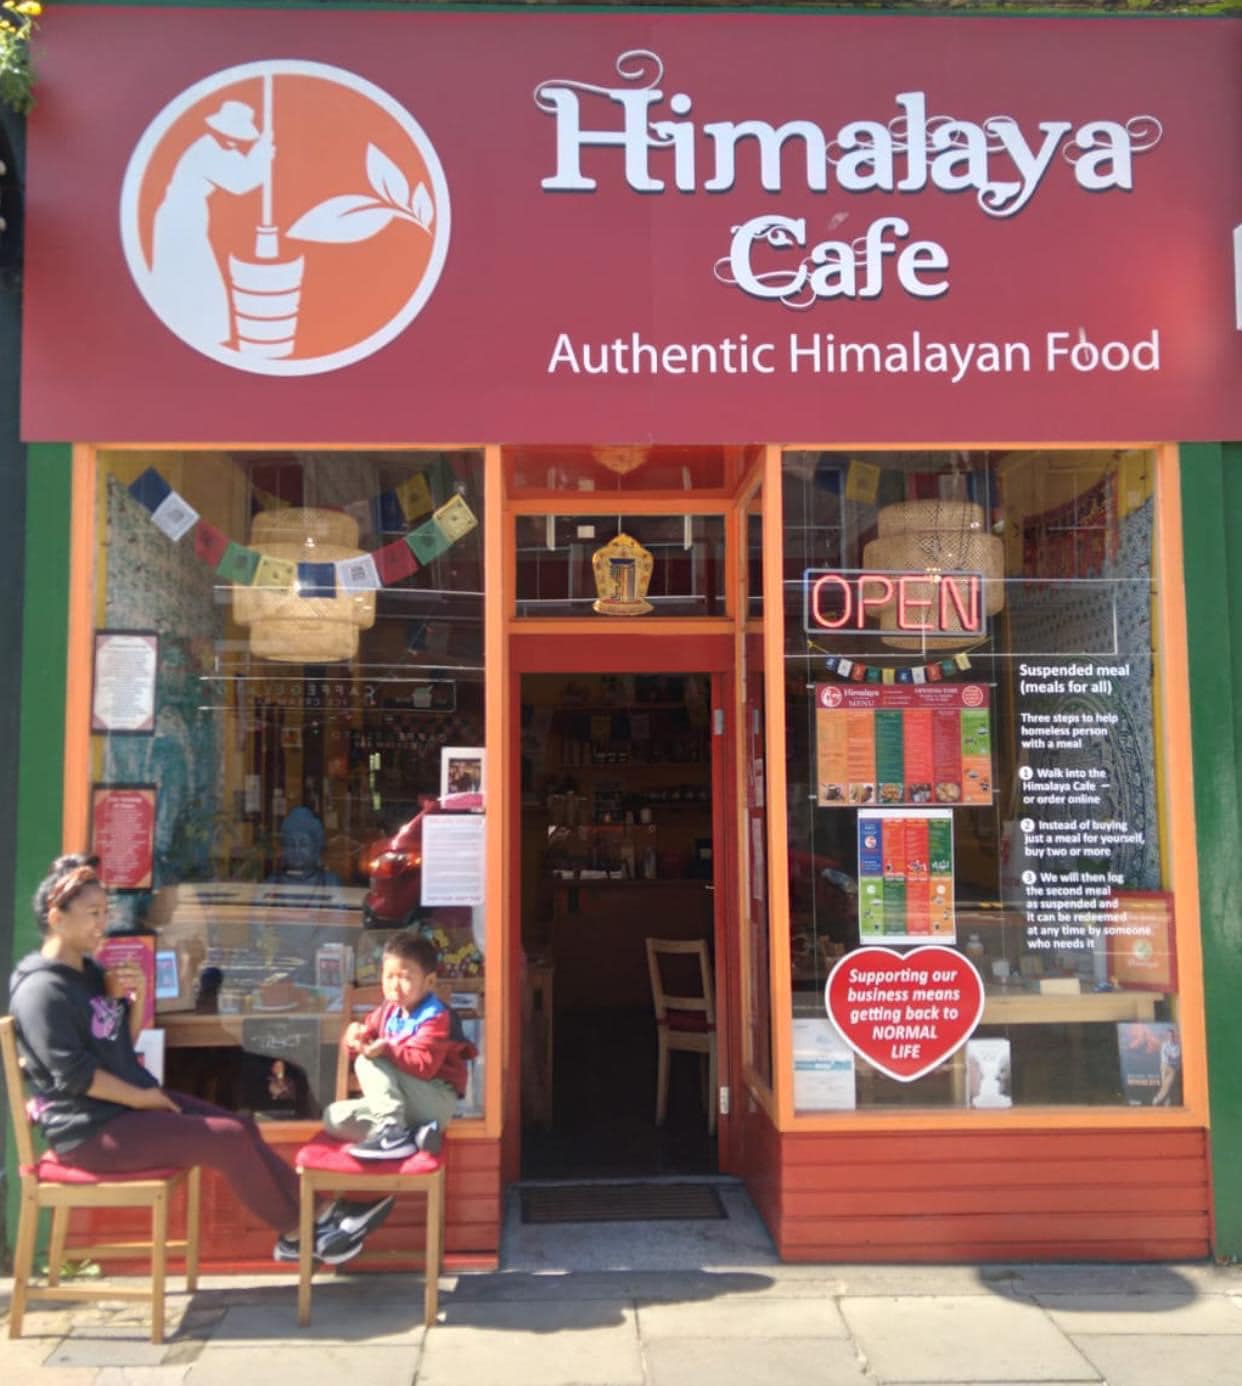 Himalaya Cafe in Scotland from Facebook.com